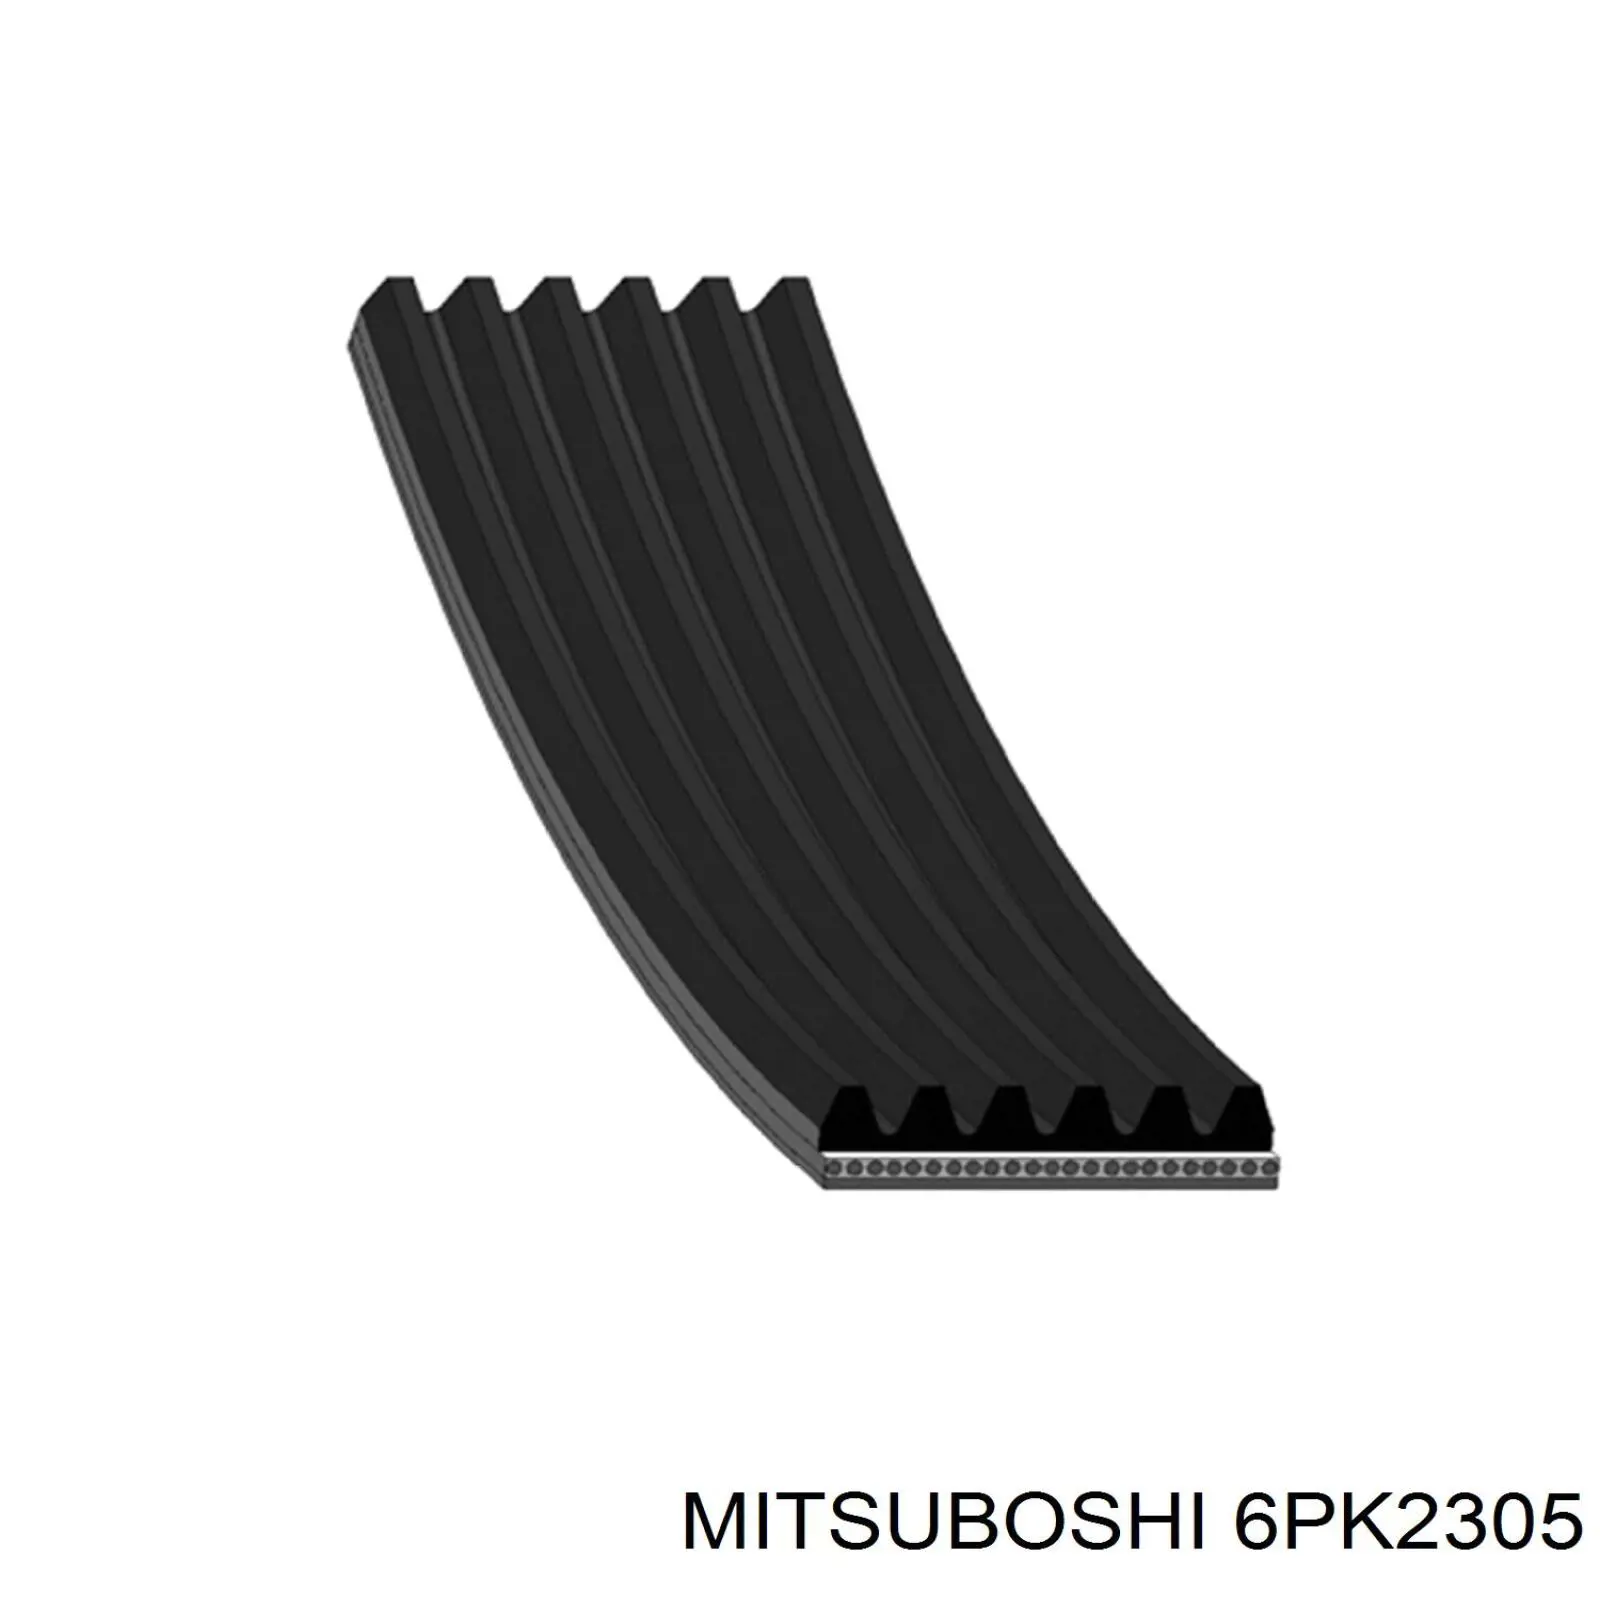 6PK2305 Mitsuboshi ремень генератора